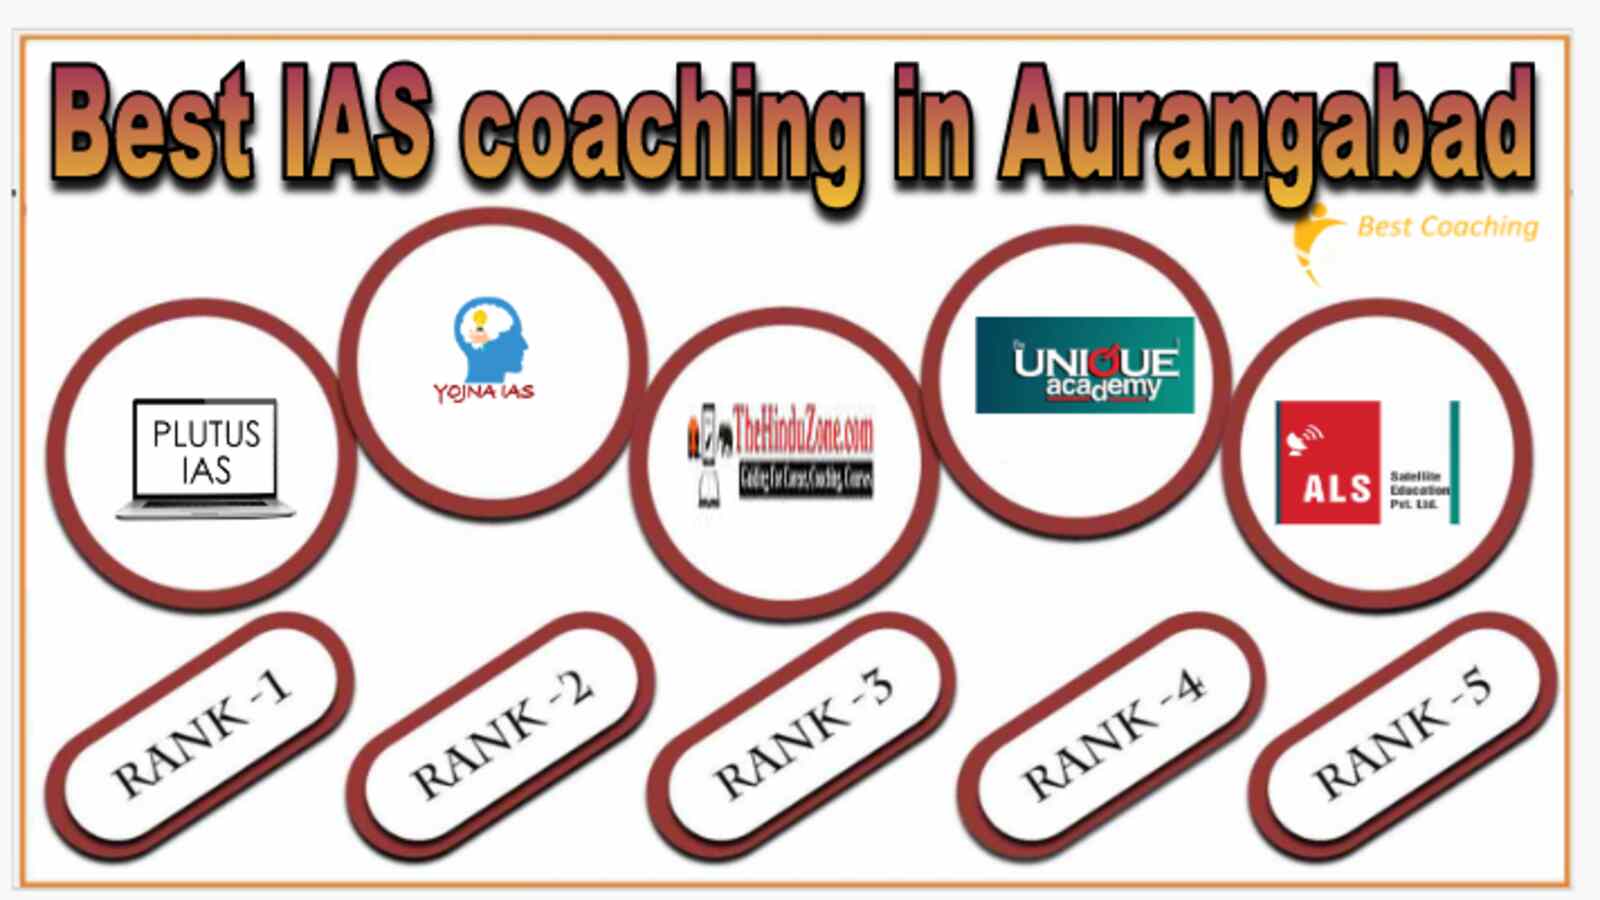 Best IAS coaching in Aurangabad